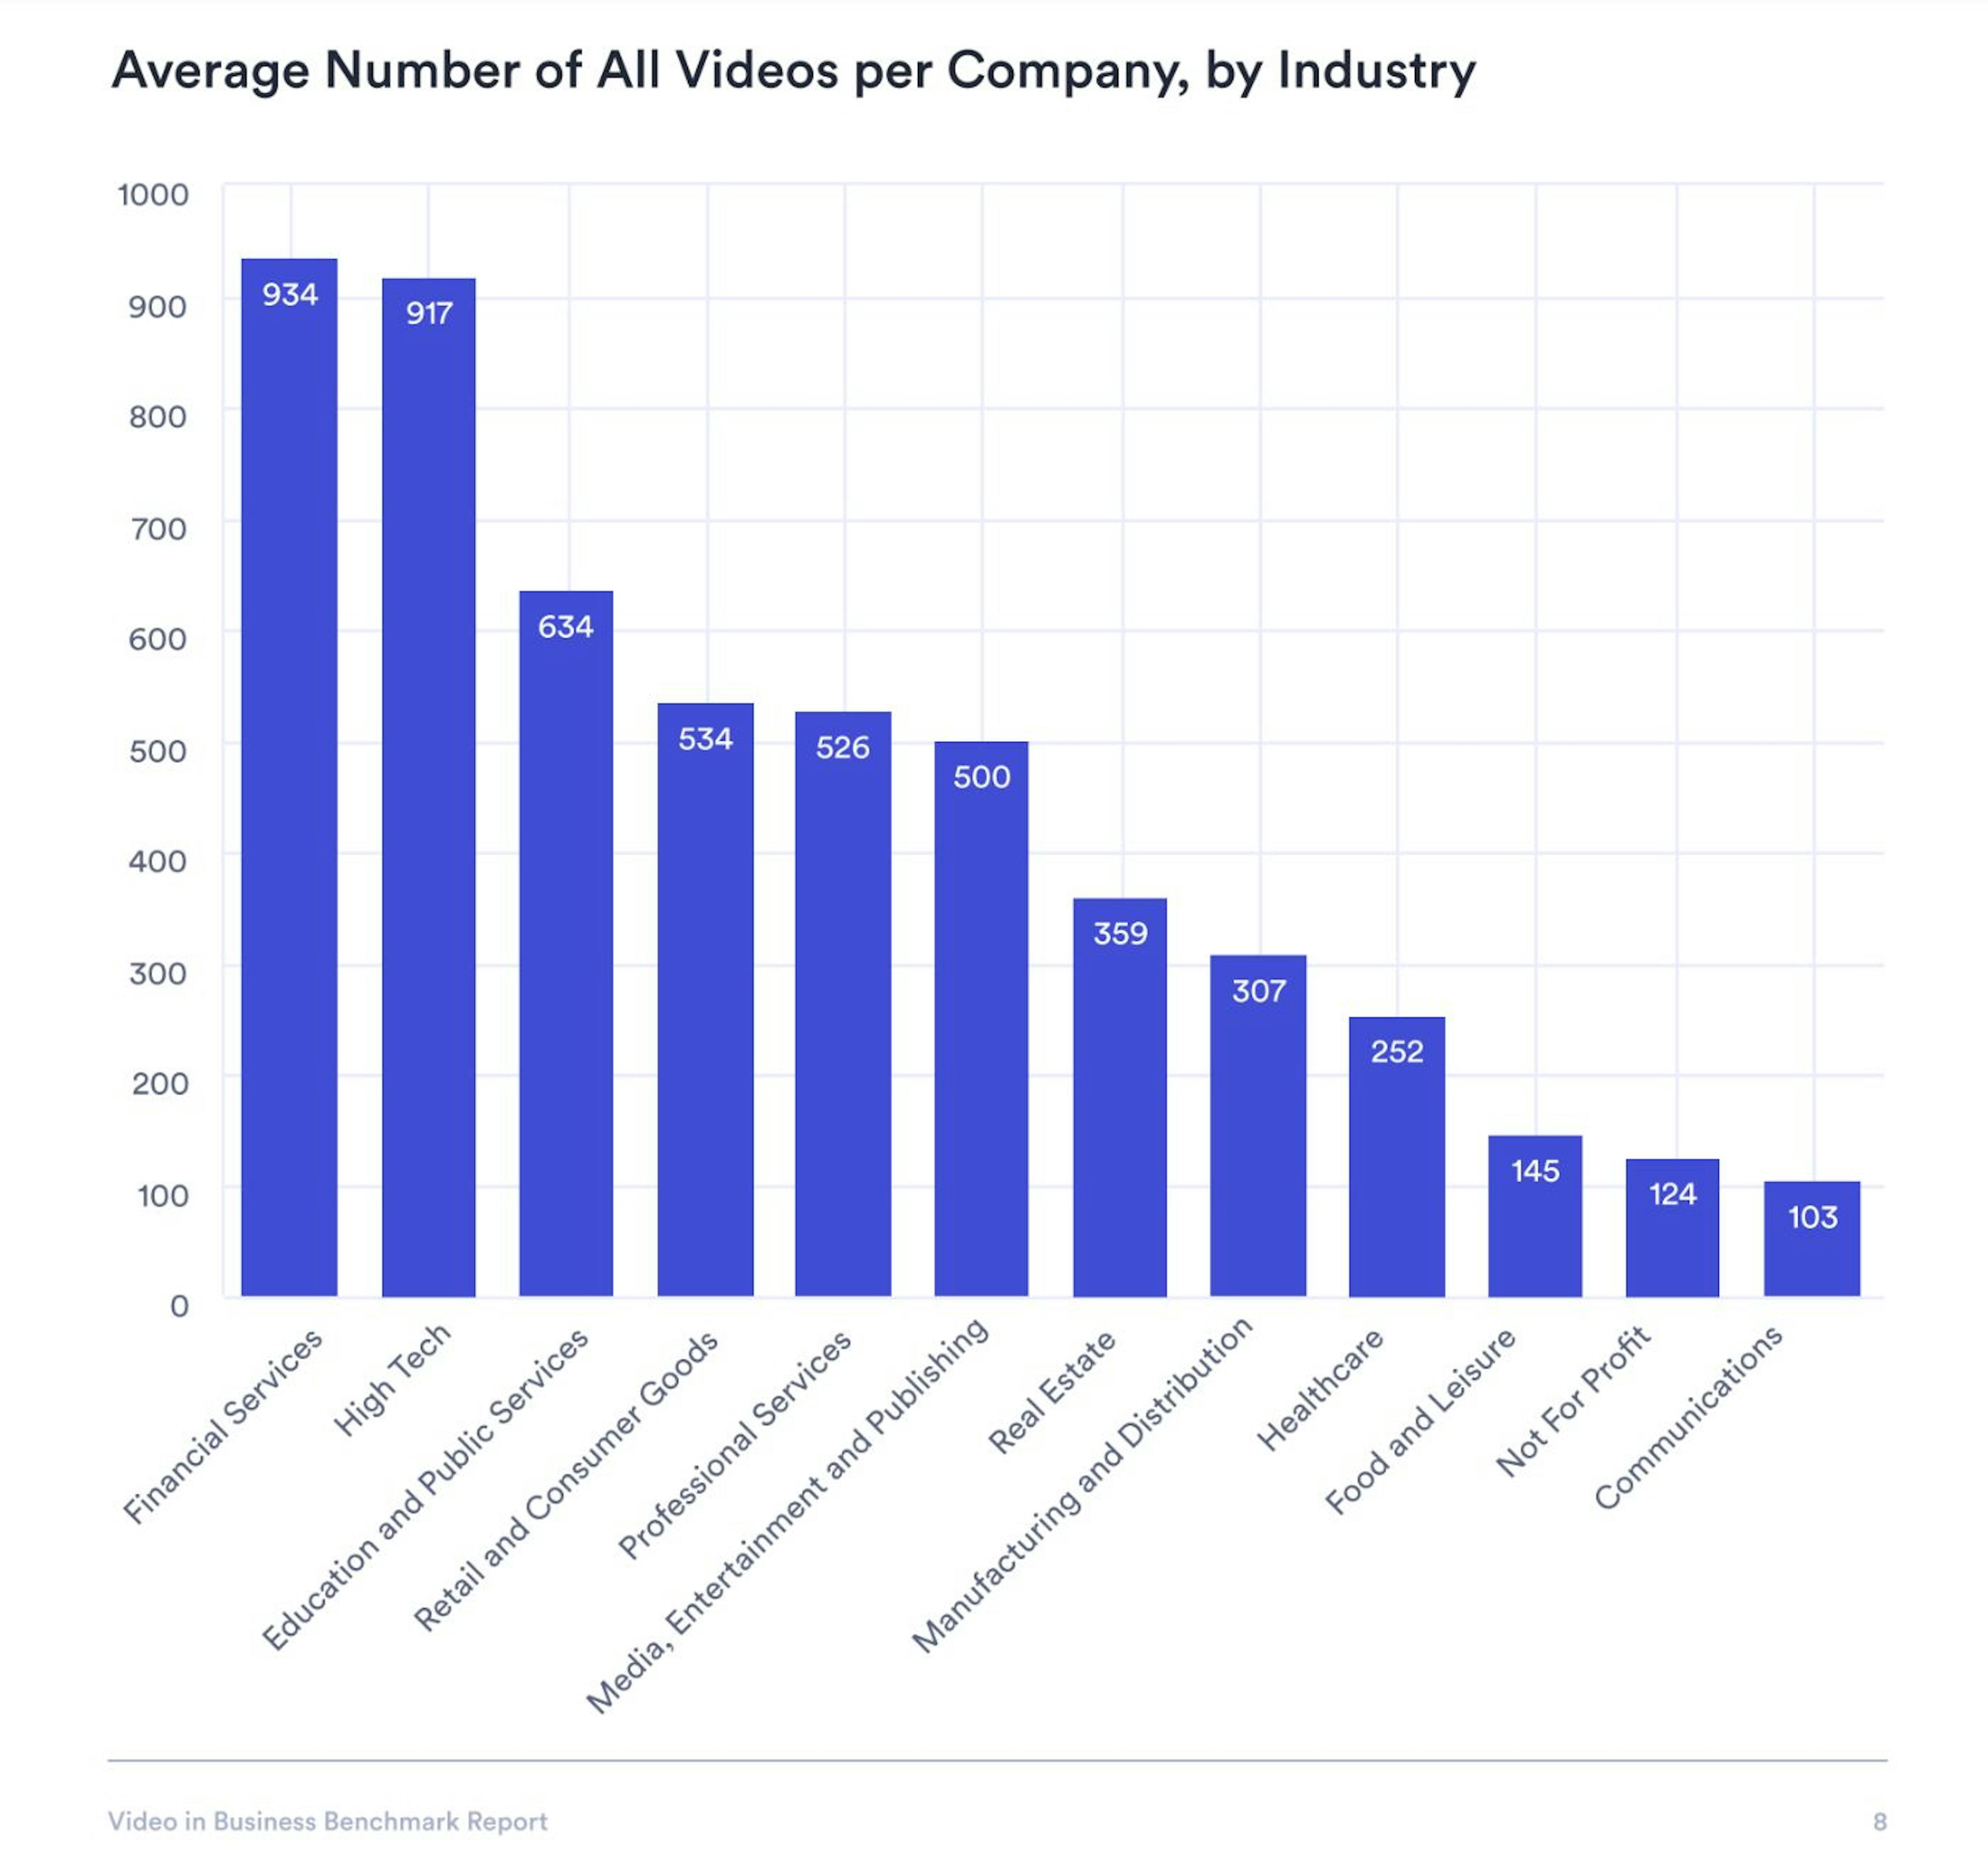 Vidyard 的视频商业基准报告图表显示了按行业划分的增长情况。